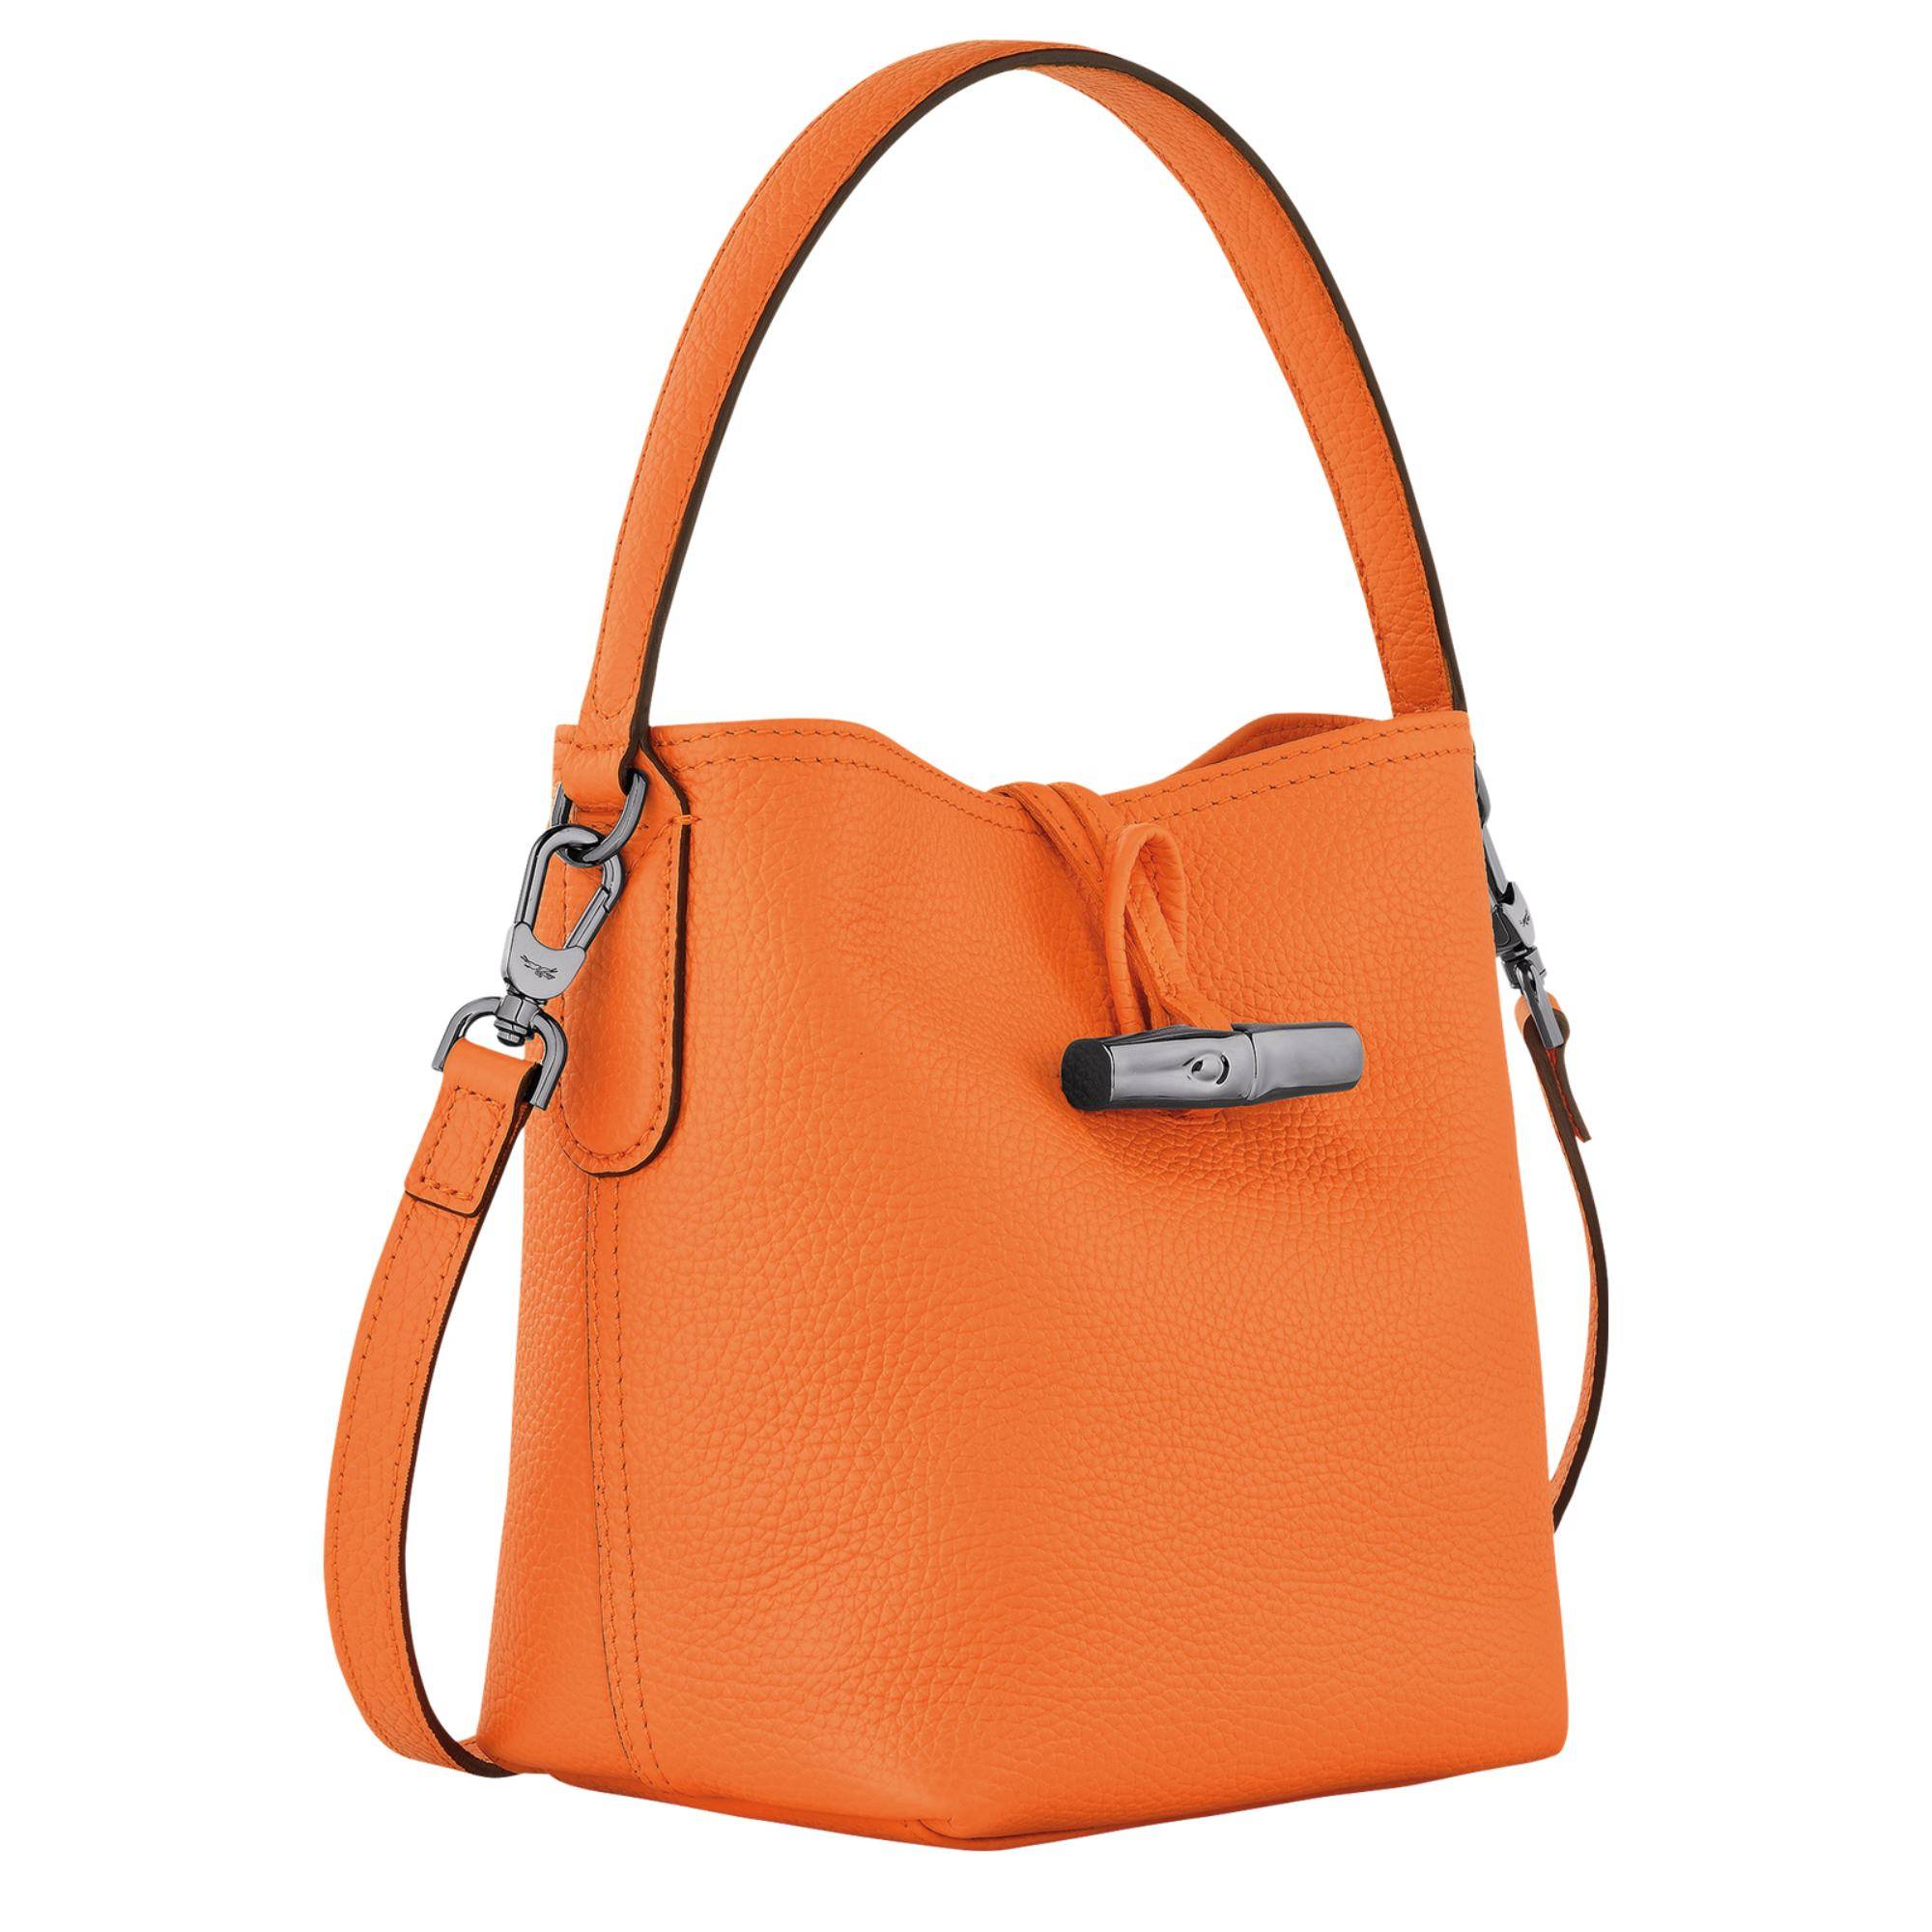 Sac seau Longchamp Roseau Essential S 10159 968 217 couleur orange, vue de profil